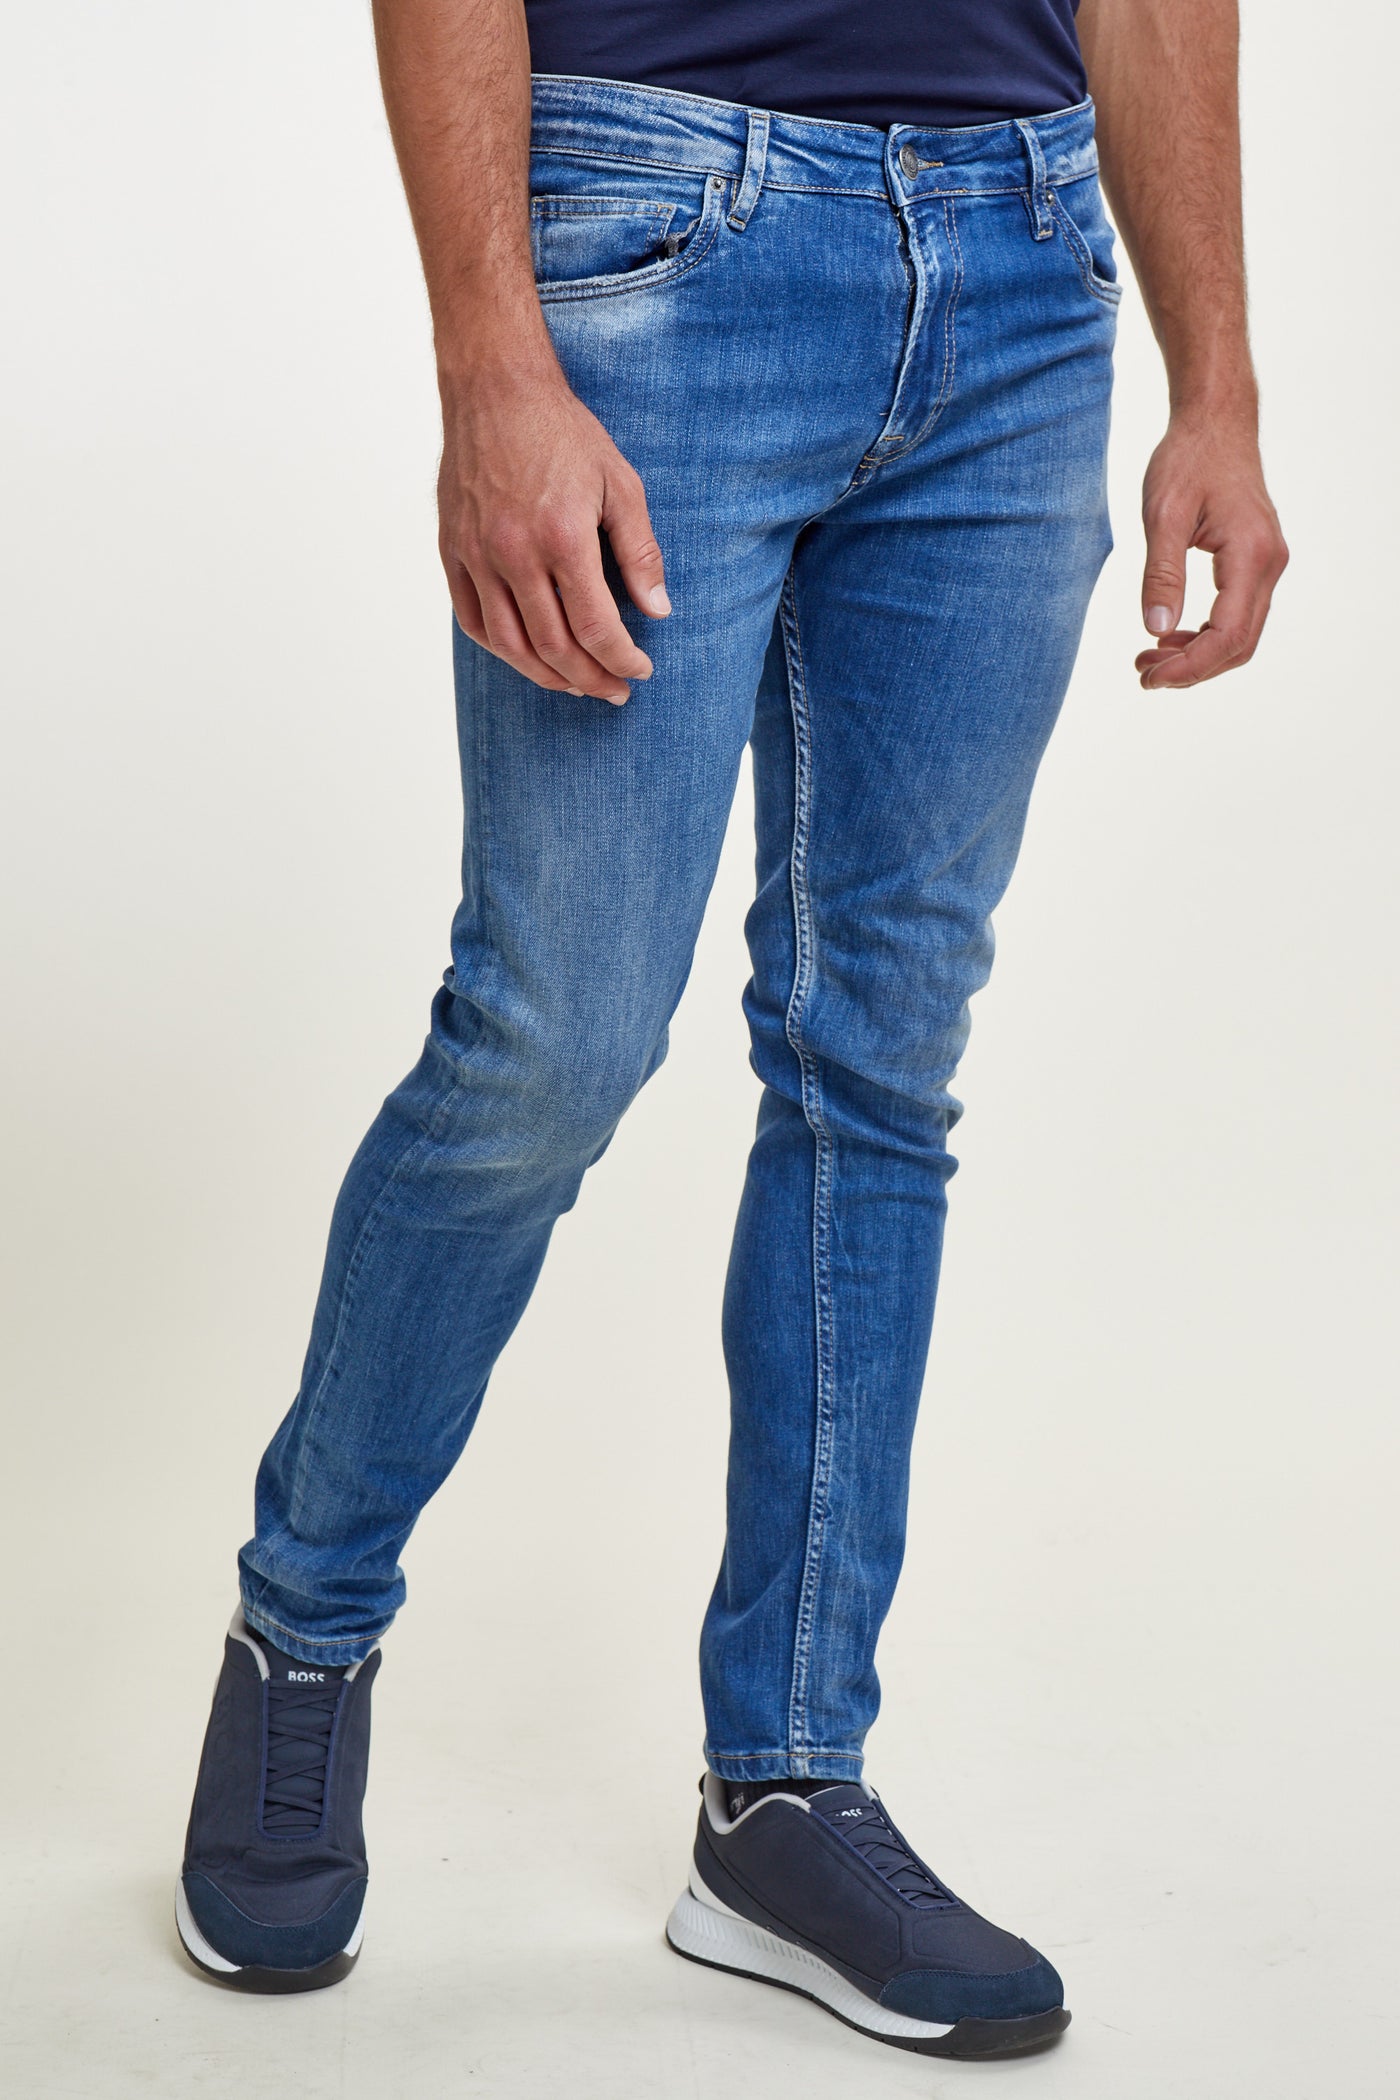 מכנס ג'ינס סלים 896 בצבע כחול 3